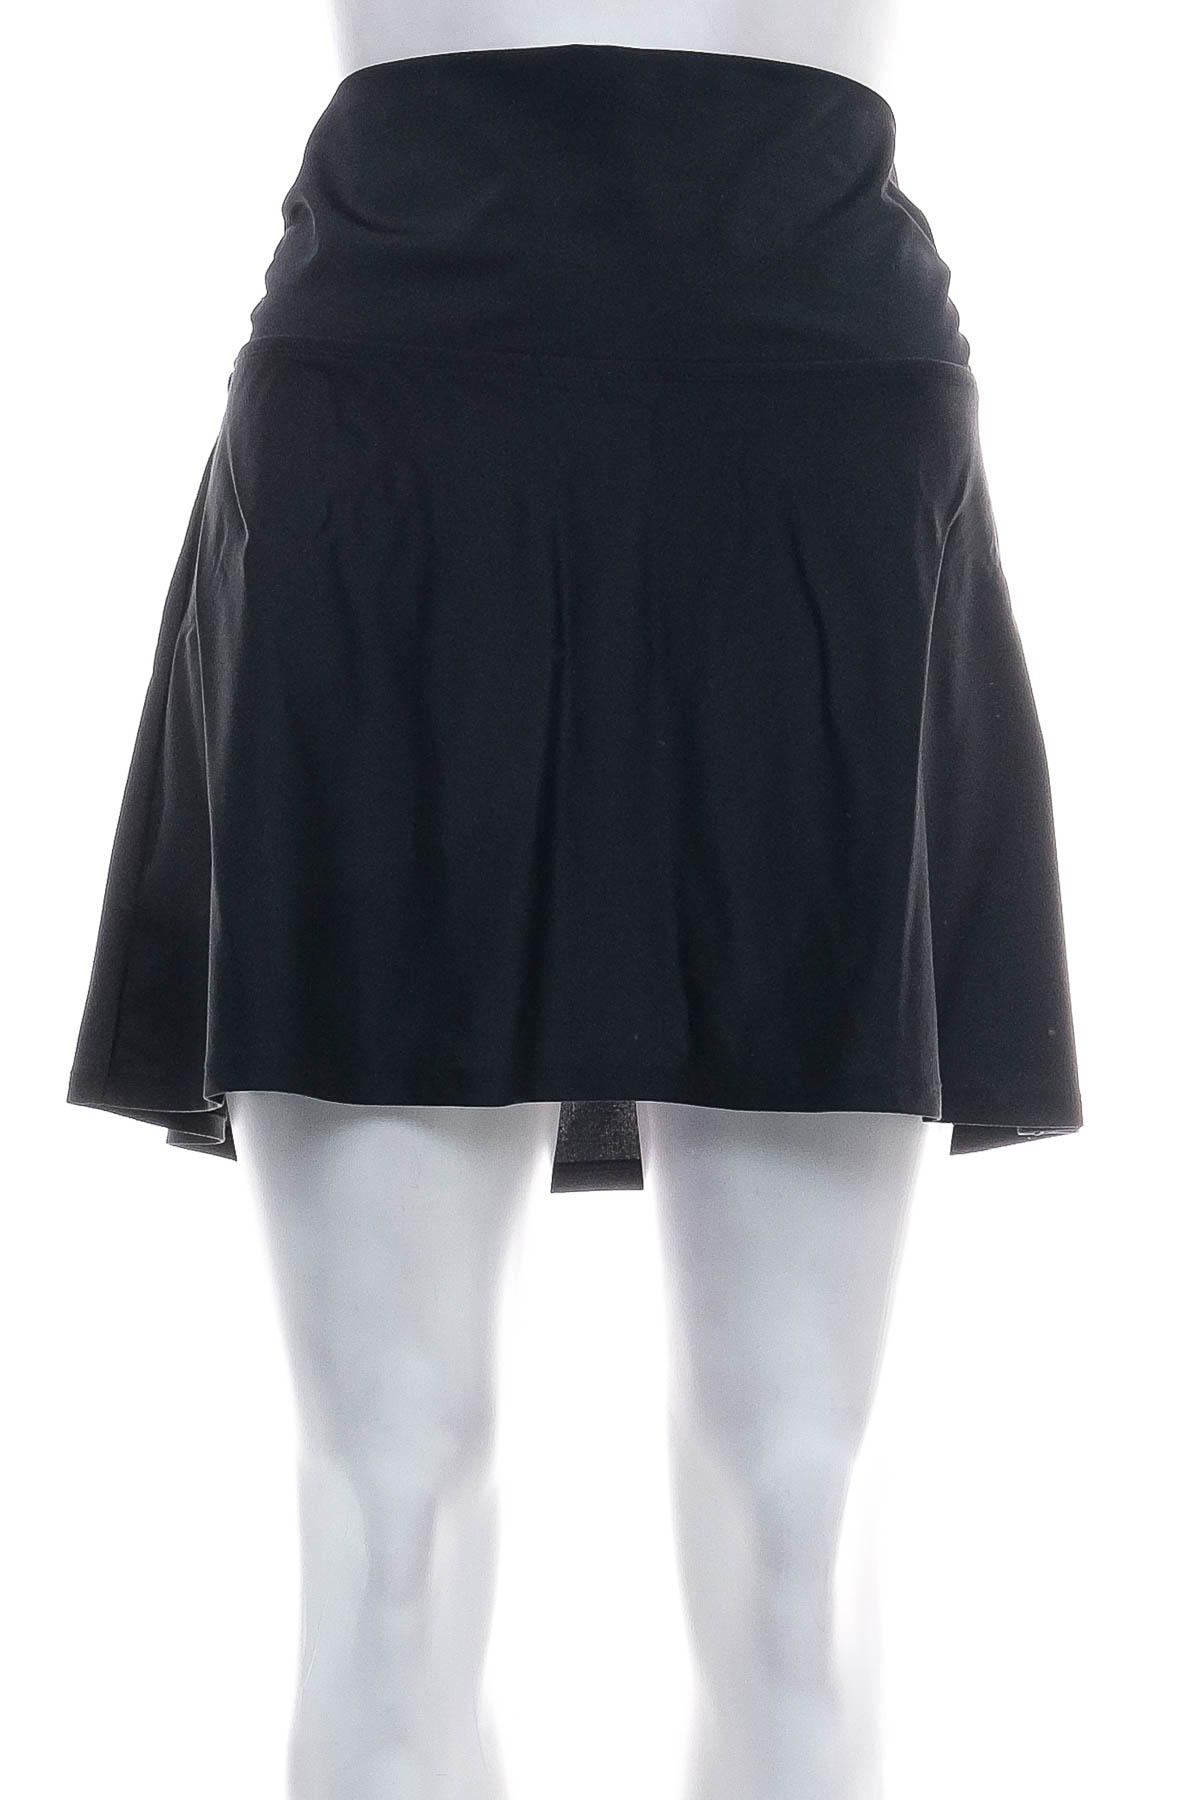 Skirt - pants - Bpc selection bonprix collection - Second hand